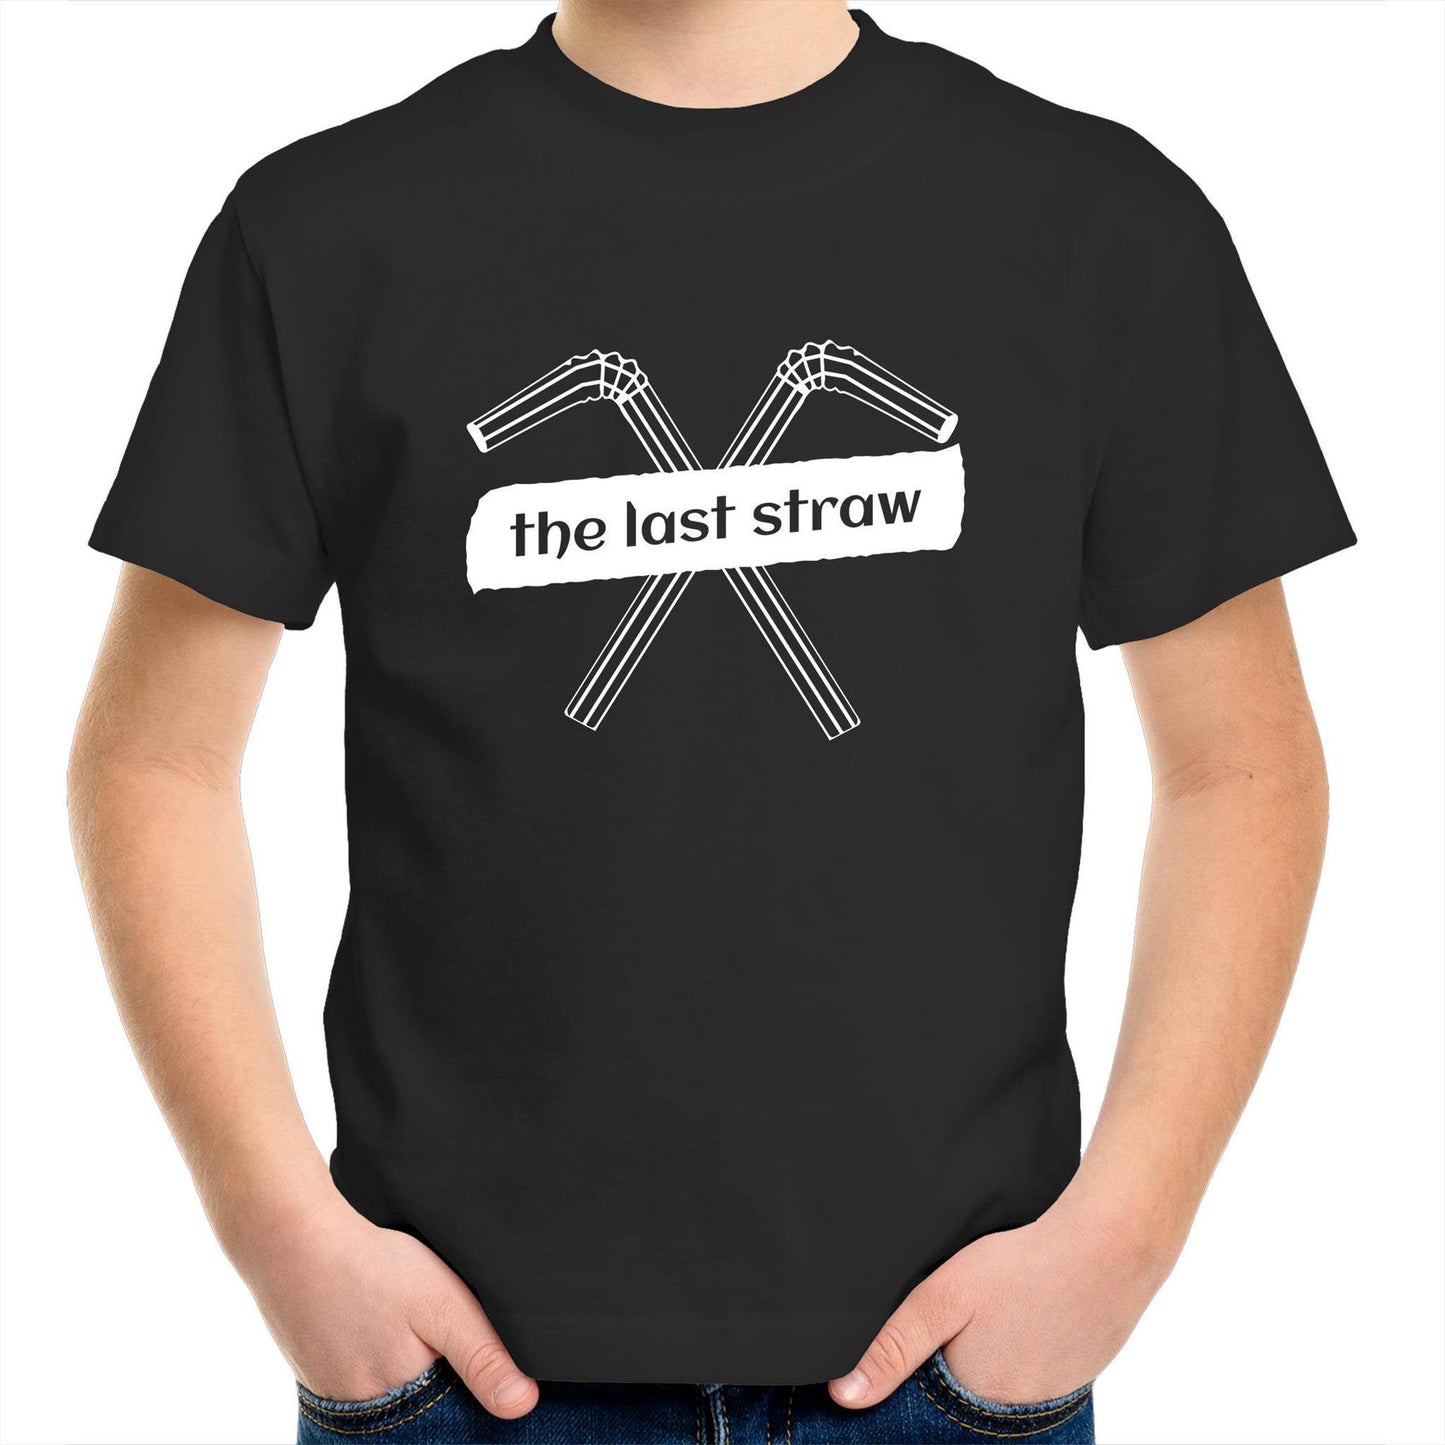 The Last Straw - Kids Youth Crew T-Shirt Black Kids Youth T-shirt Environment